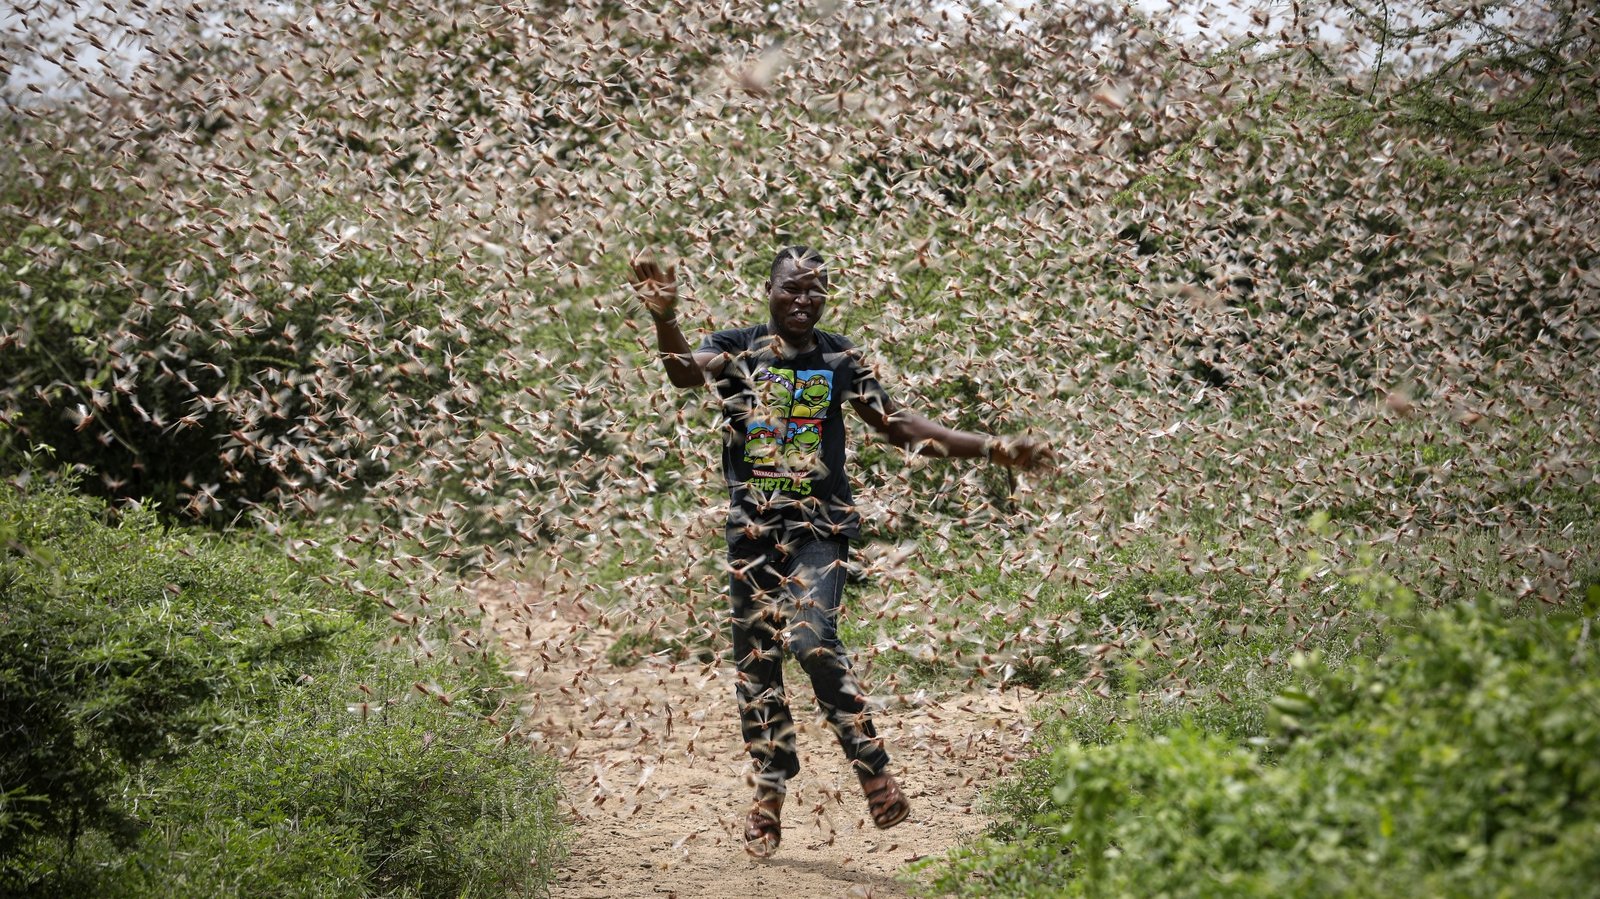 Billions of locusts swarm through East Africa - RTE.ie